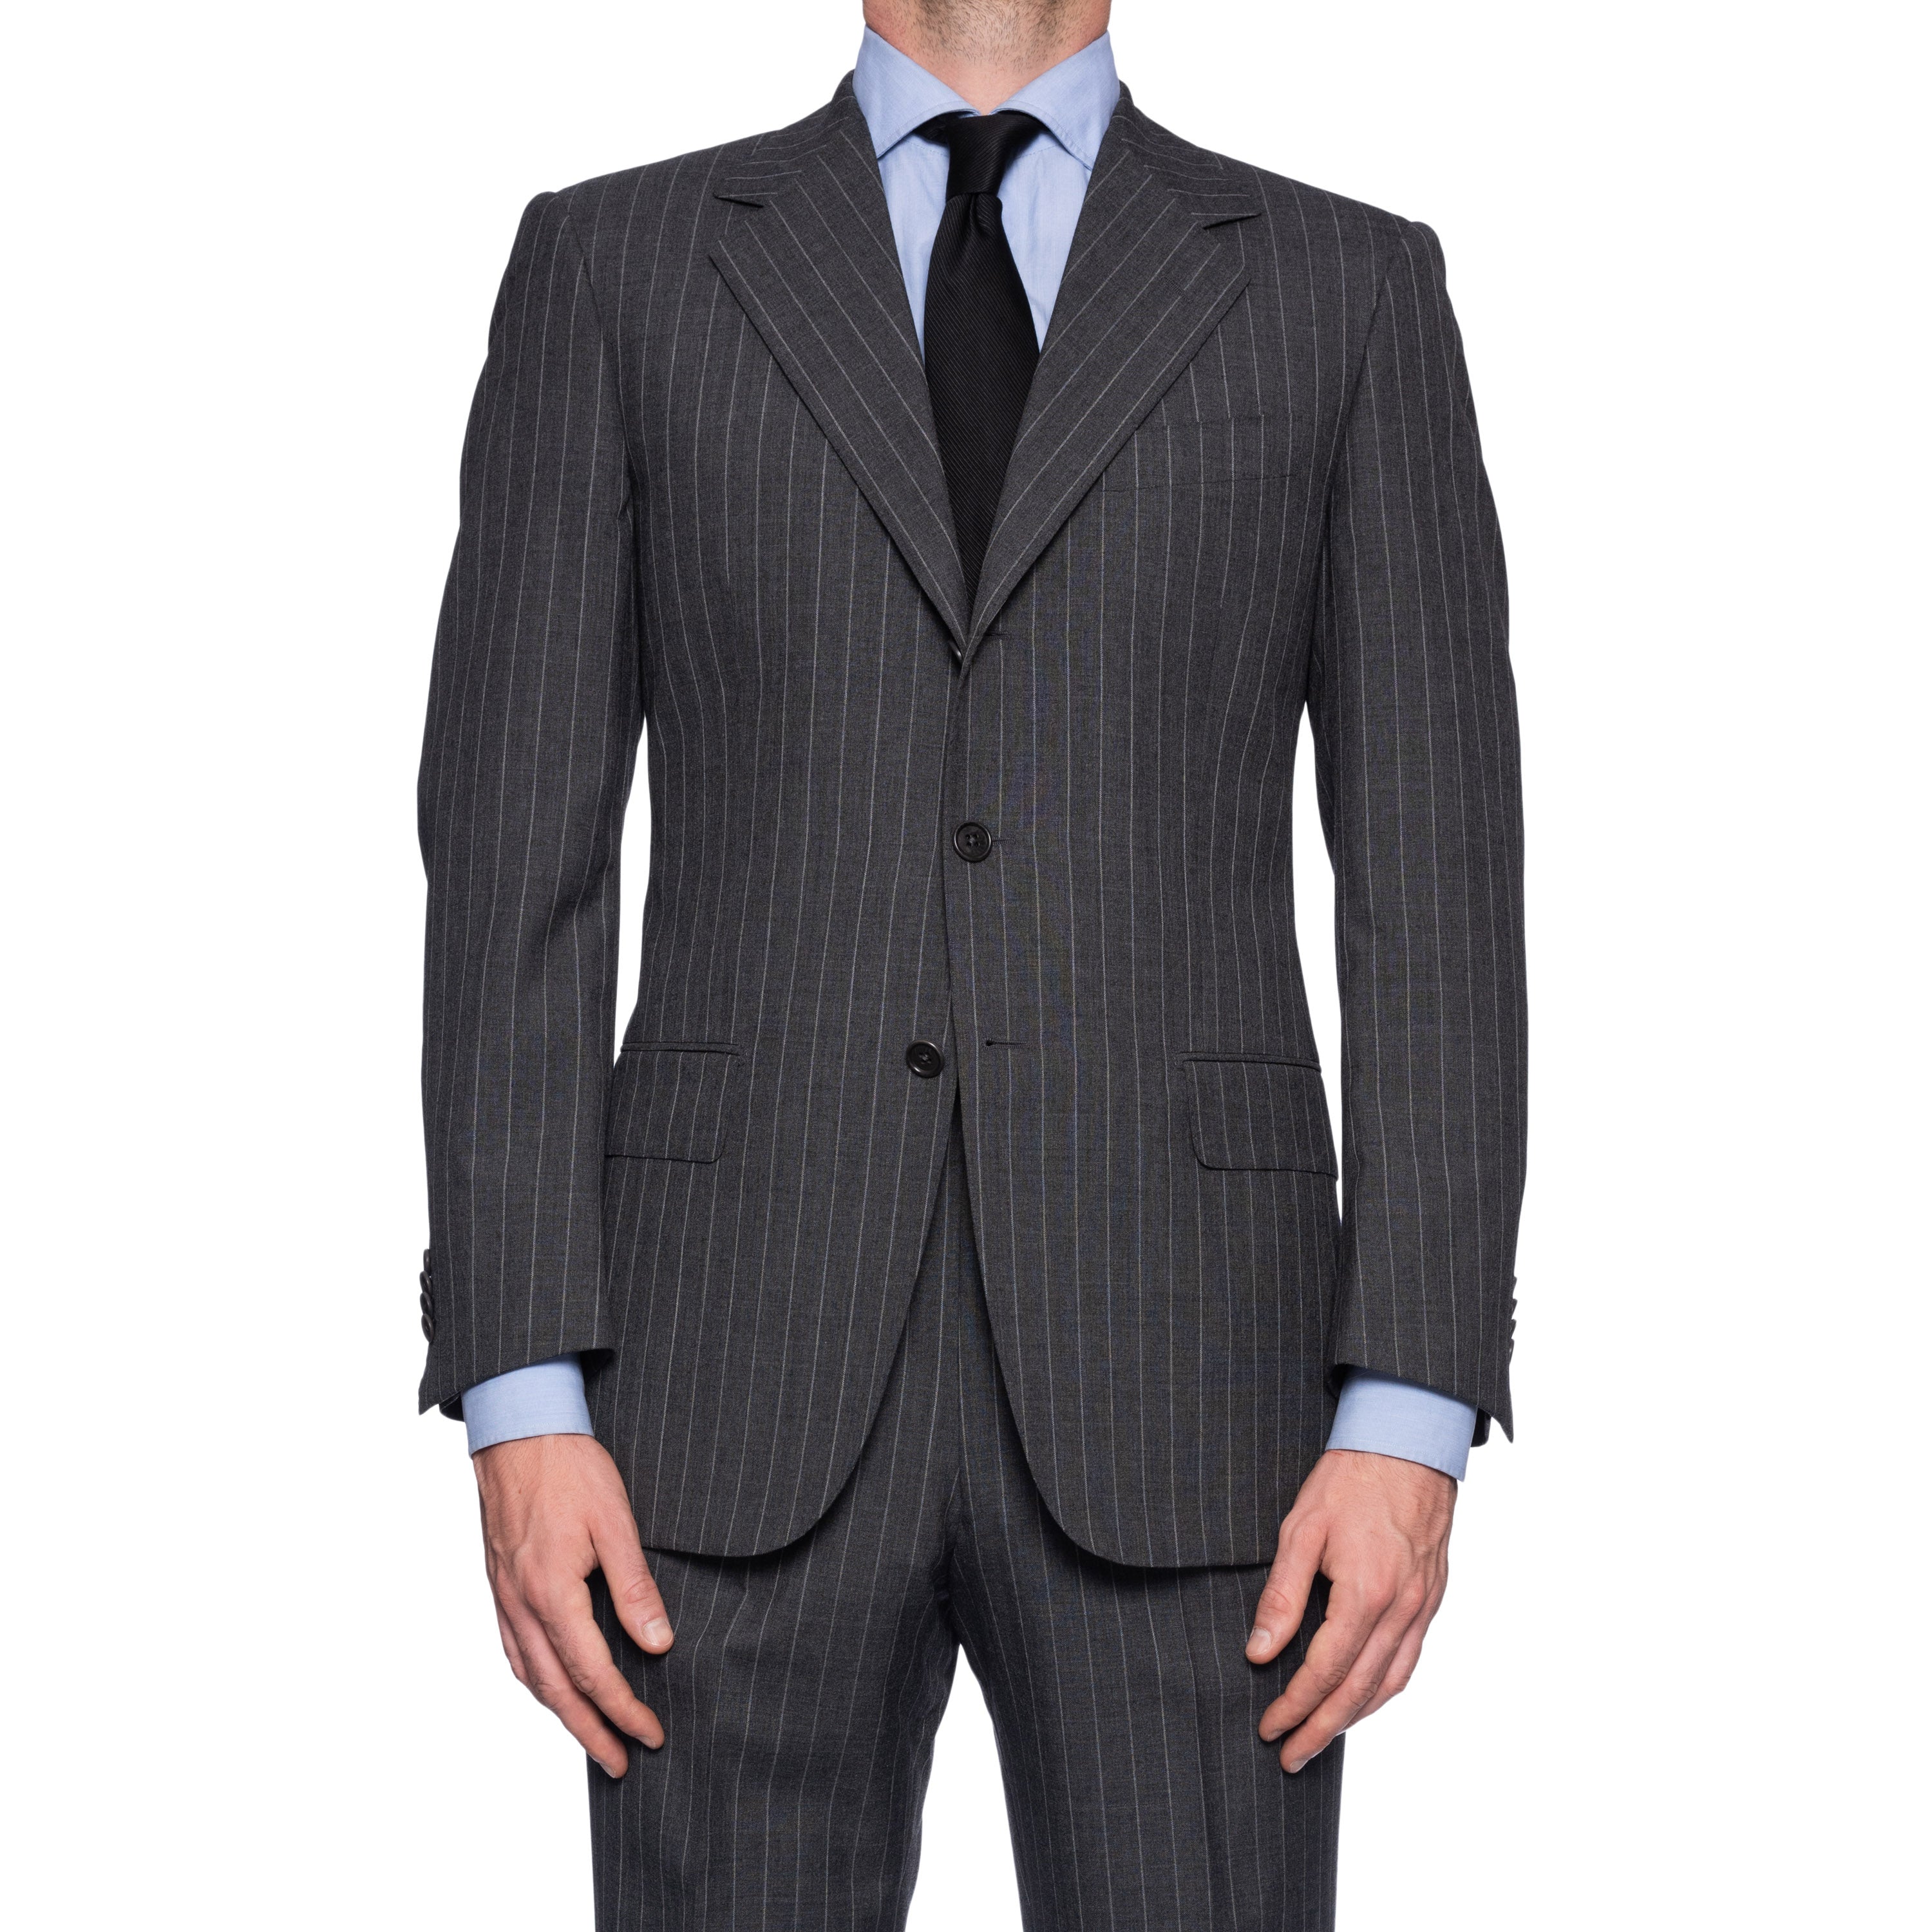 SARTORIA CASTANGIA Handmade Gray Striped Wool Business Suit NEW CASTANGIA